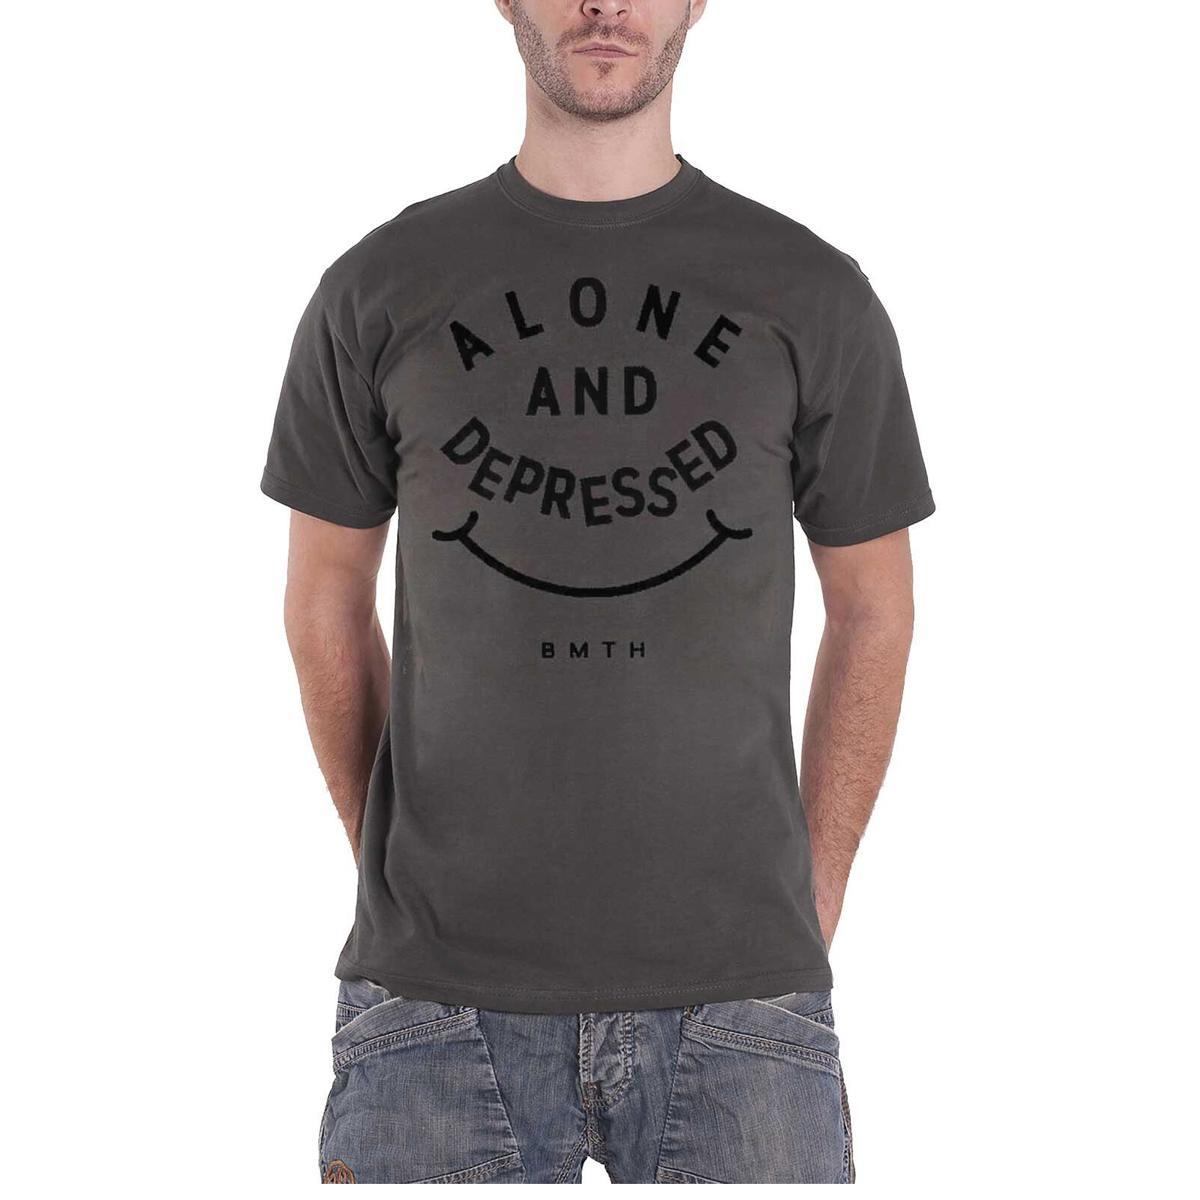 Bring Me The Horizon Unisex Adult Alone & Depressed Cotton T-Shirt (Charcoal Grey) (M)